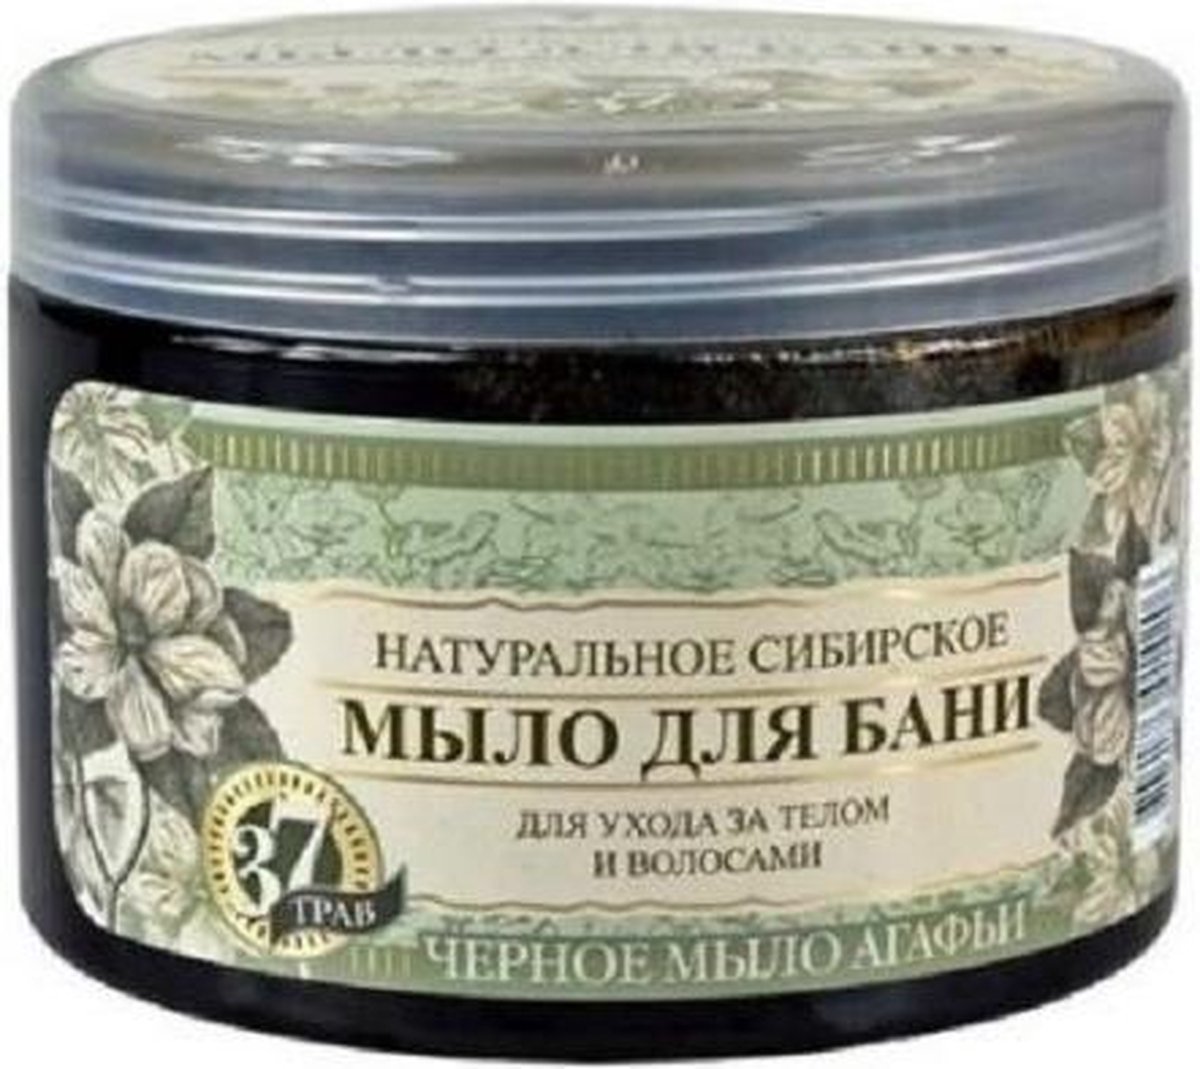 Bania Agafii - Natural Siberian Black Soap For Body And Hair Care 500Ml